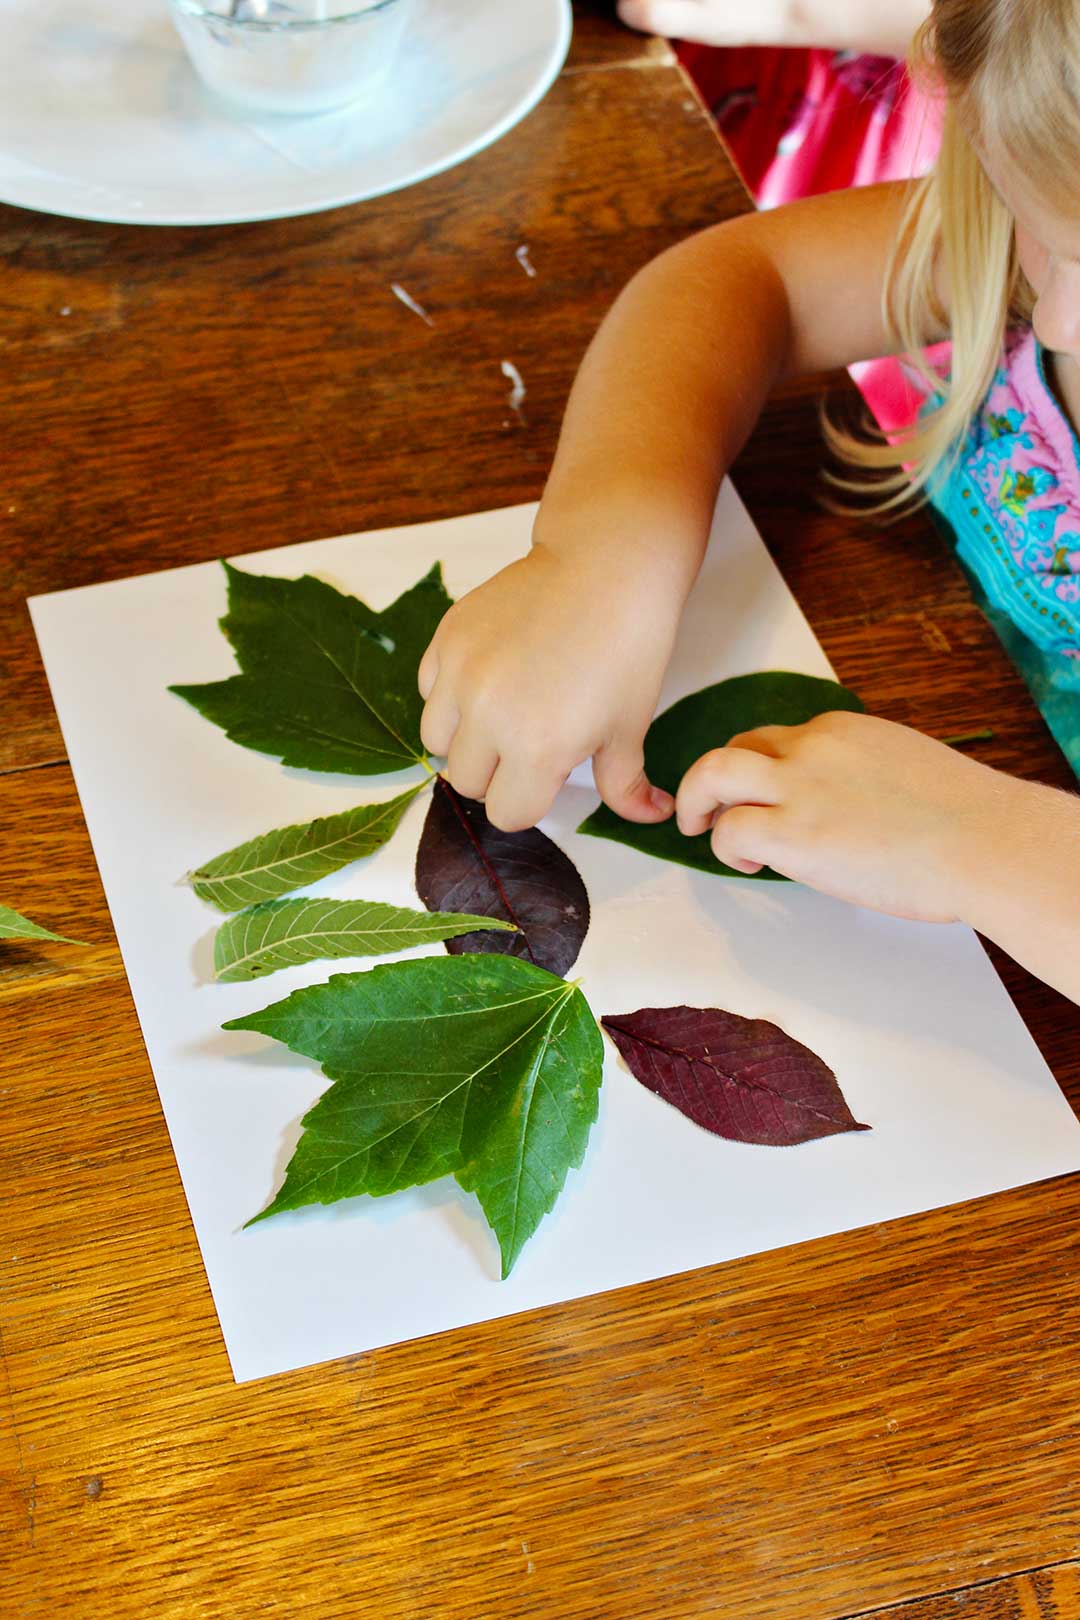 Girl pressing down leaf onto paper for her leaf collage.